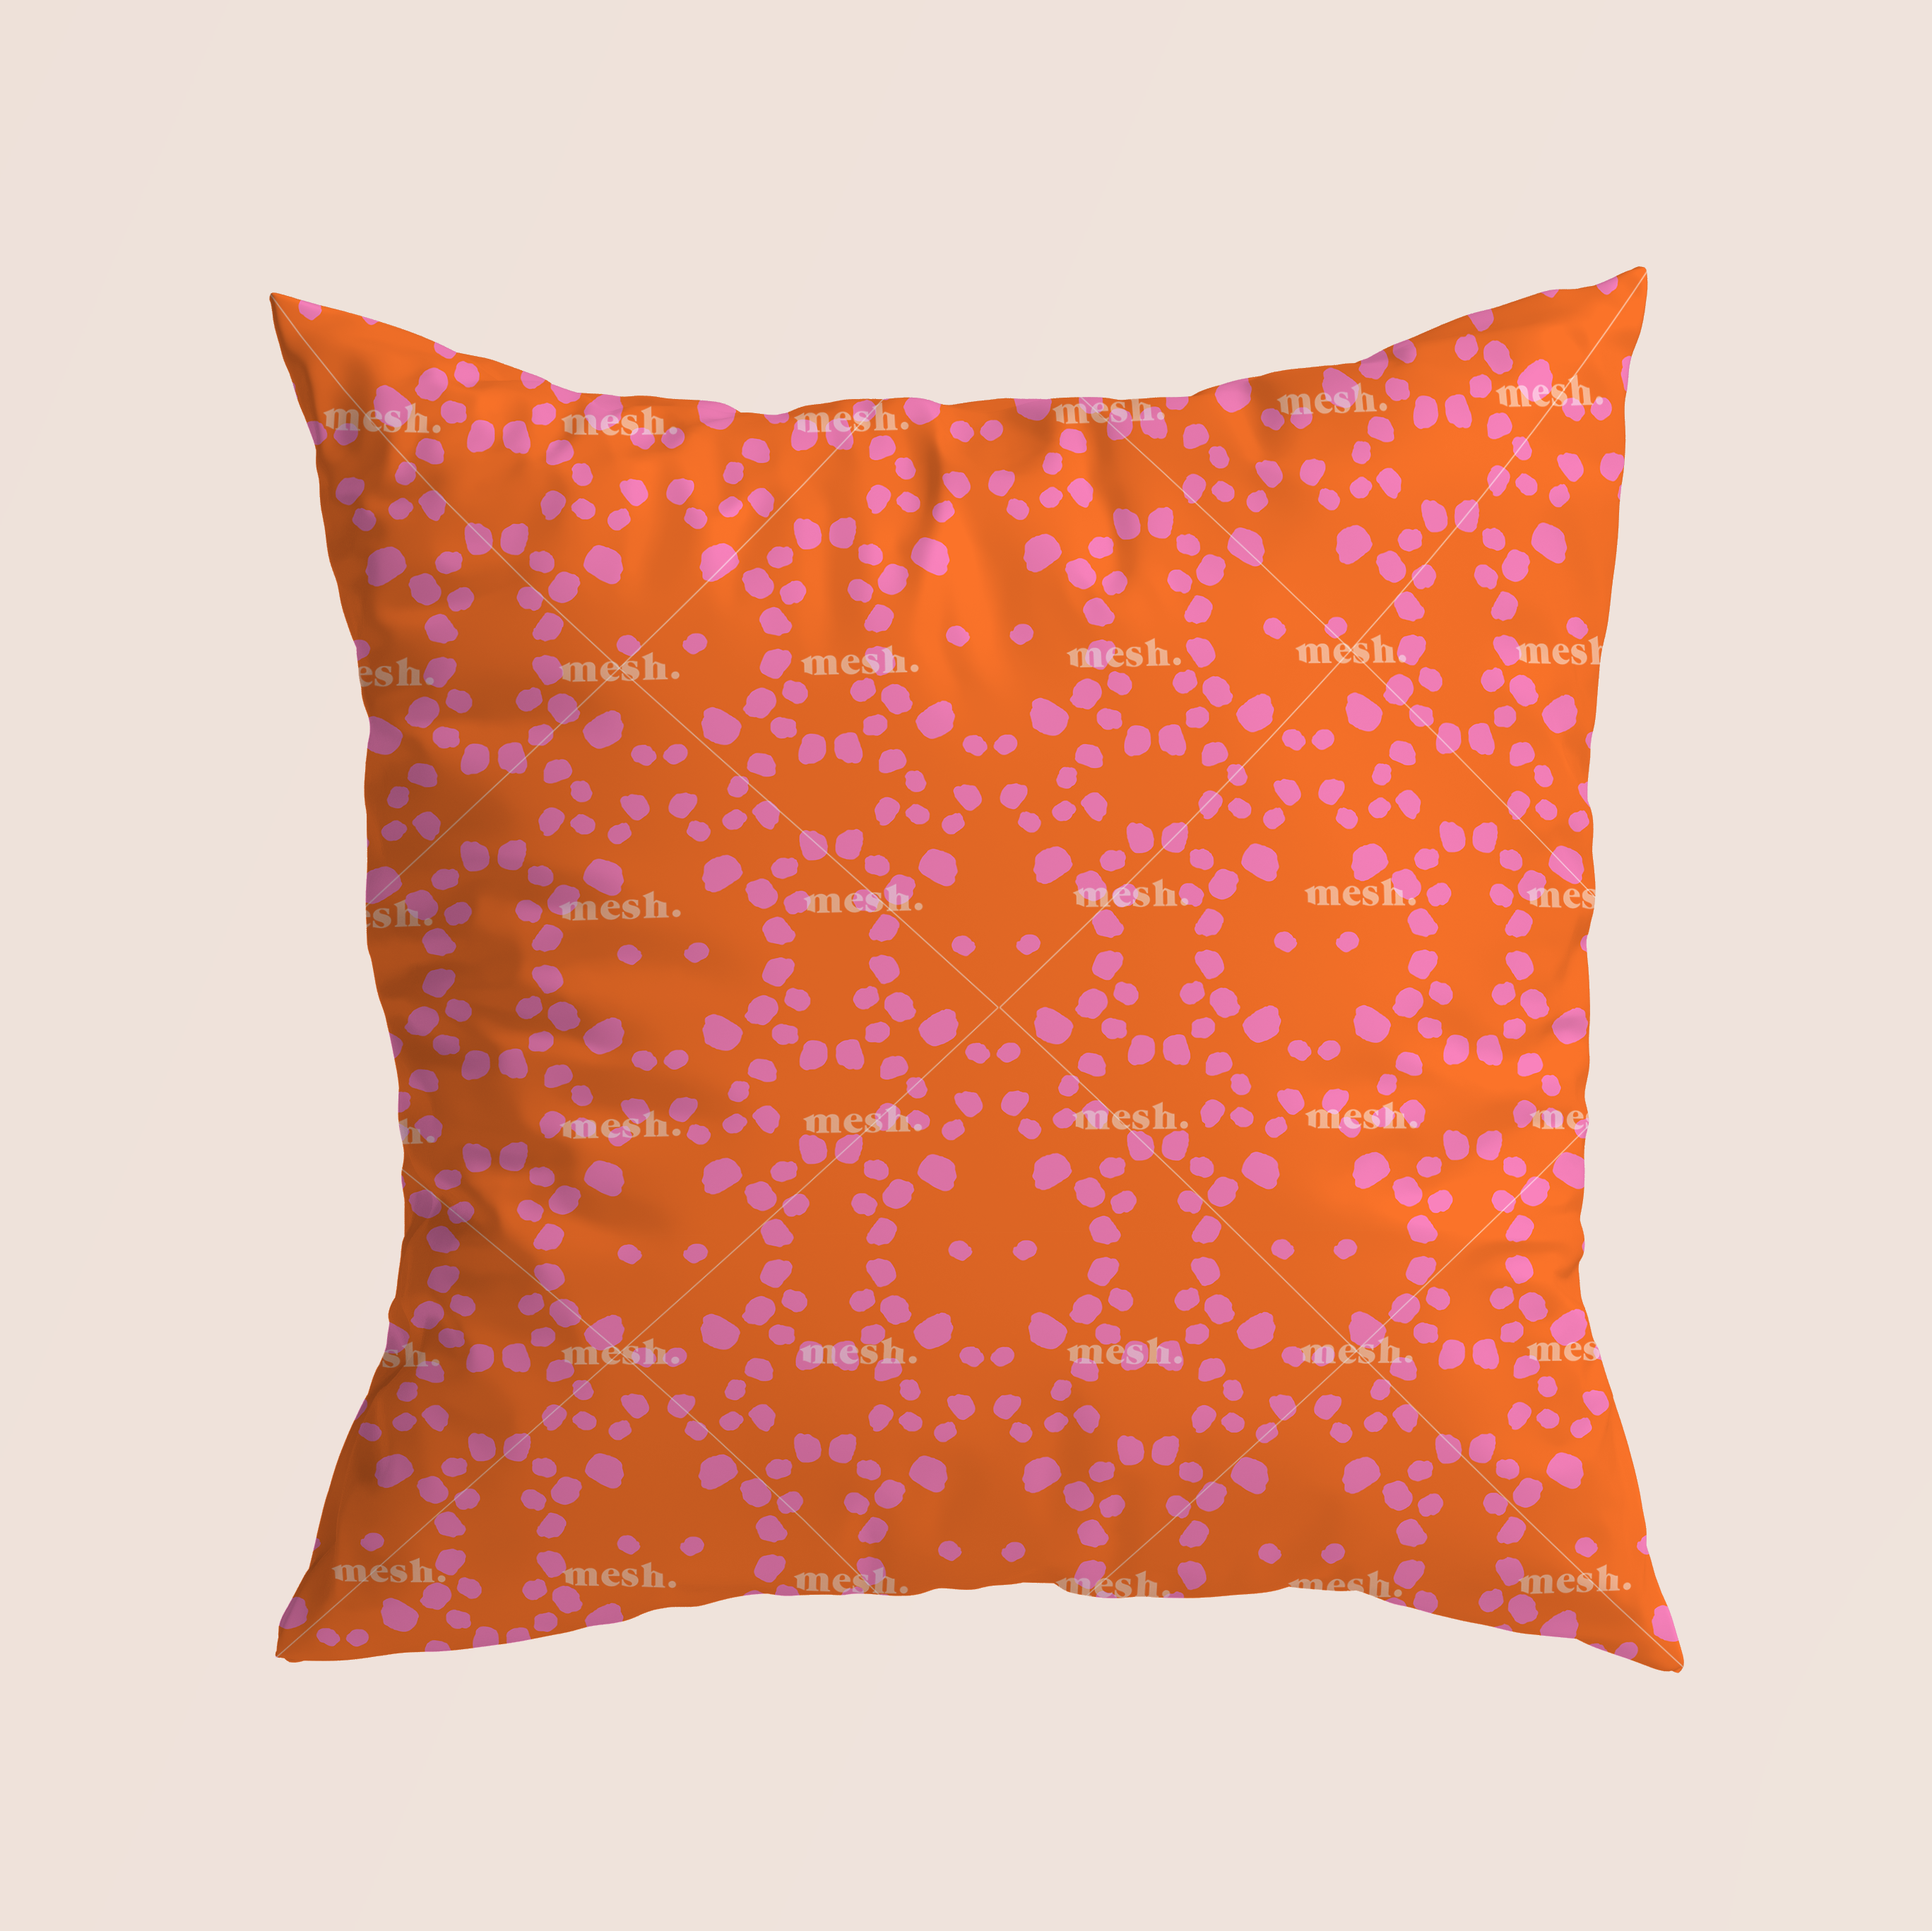 Animal skin digital in pink on orange design printed on recycled fabric pillow mockup